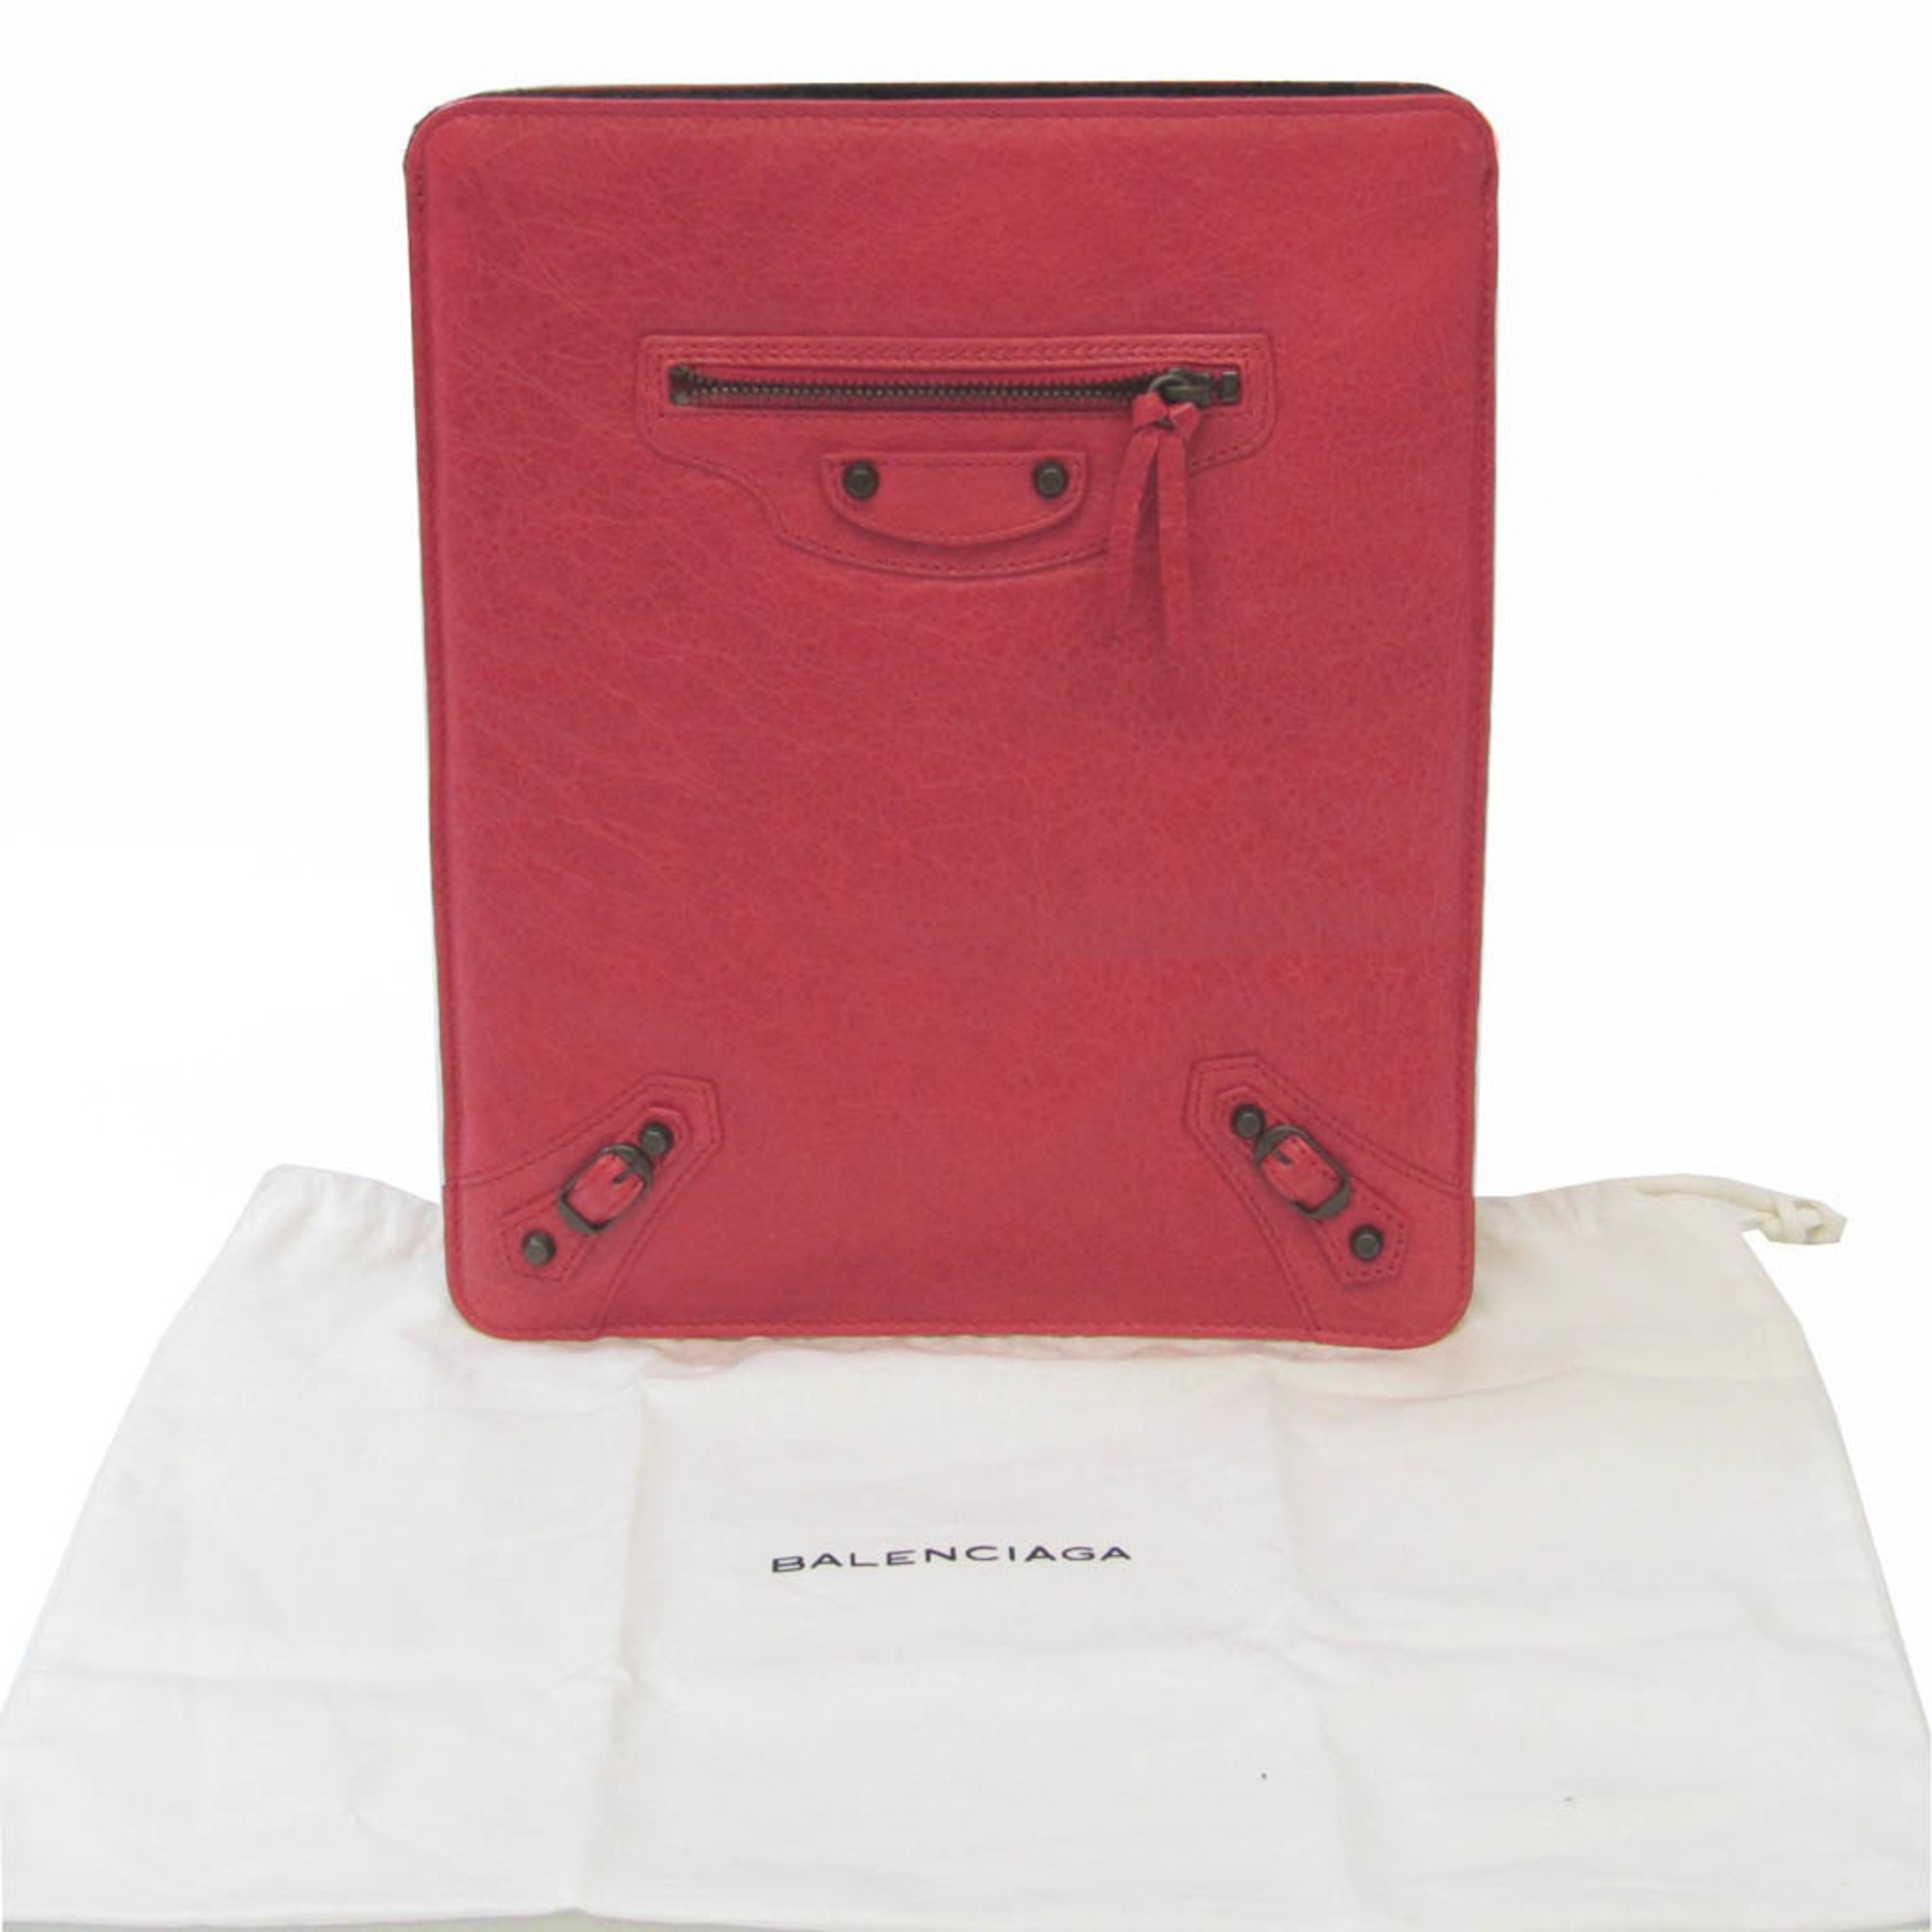 Balenciaga Case Red Color classic ipad case 272469